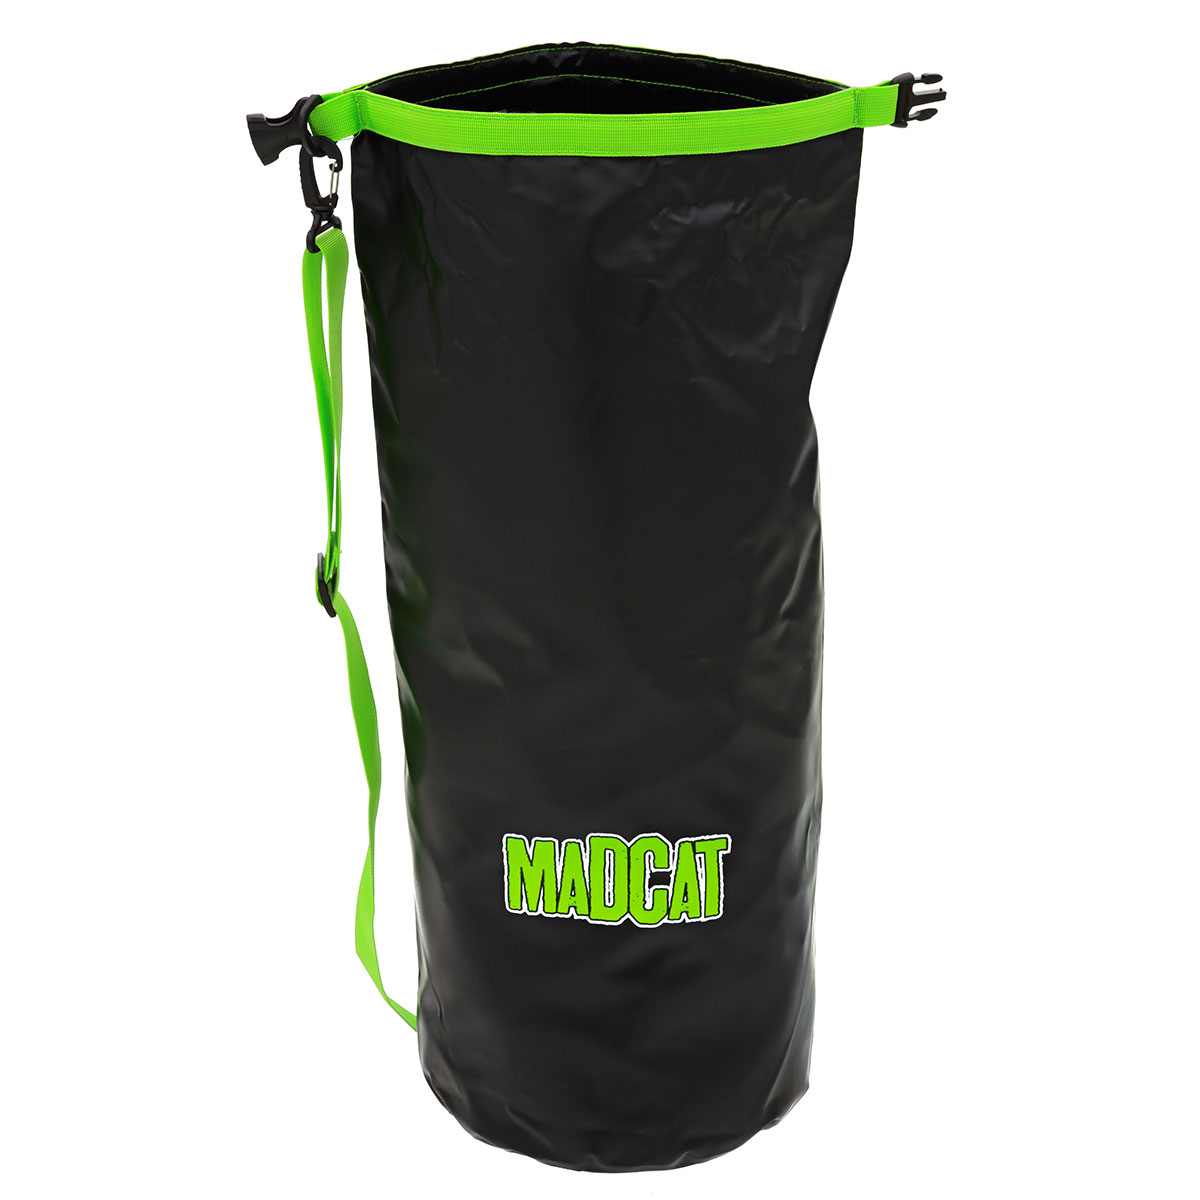 MADCAT Waterproof Bag 55 L